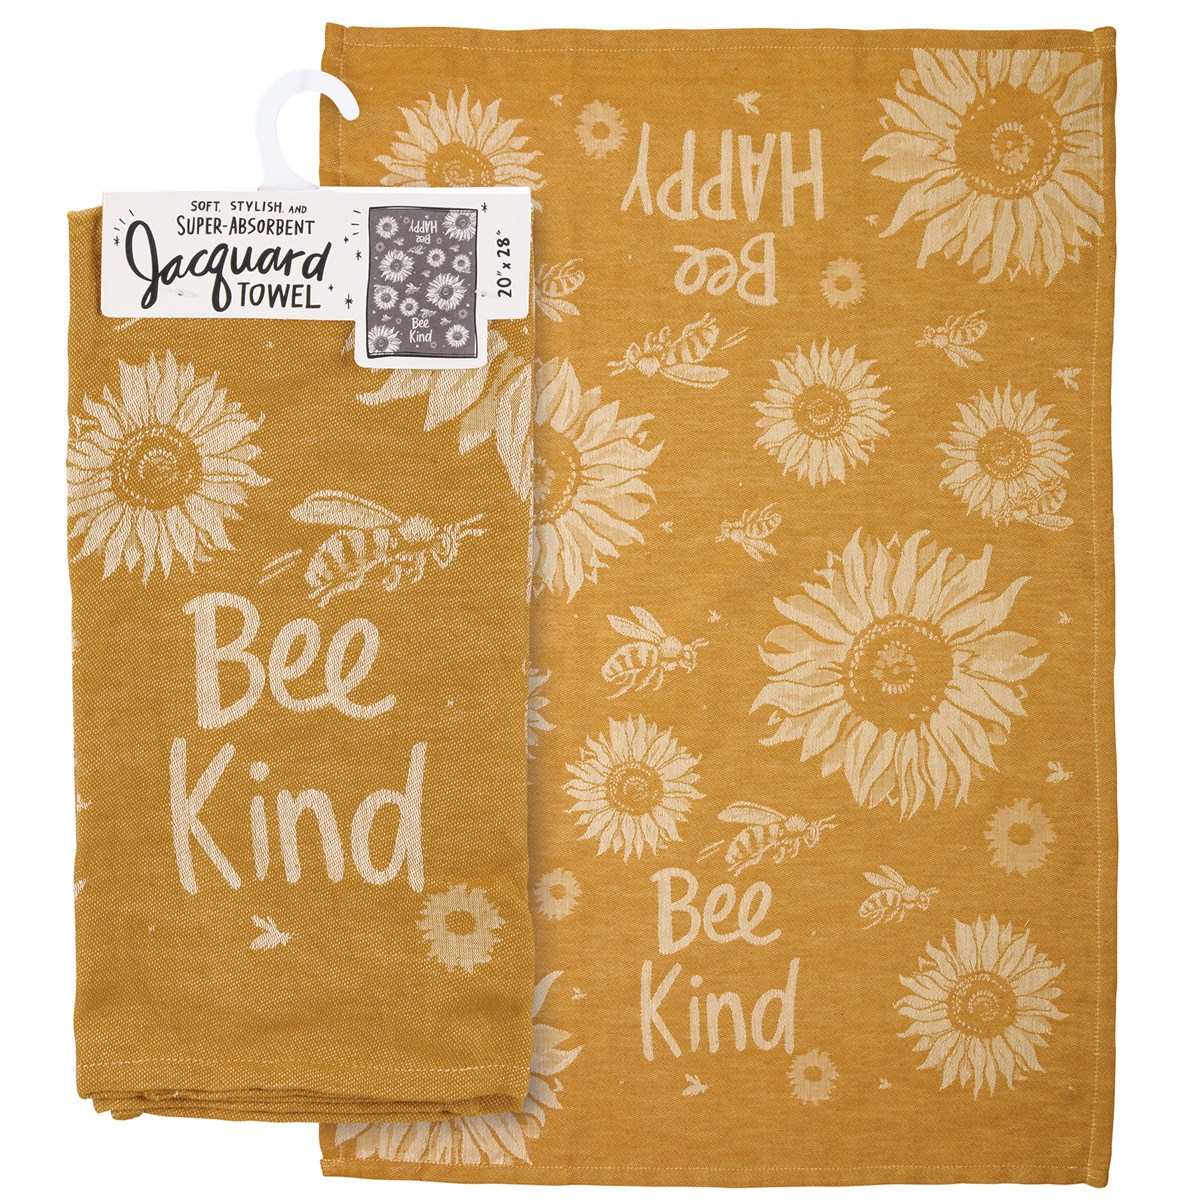 Bee Kind Kitchen Towel - Cotton